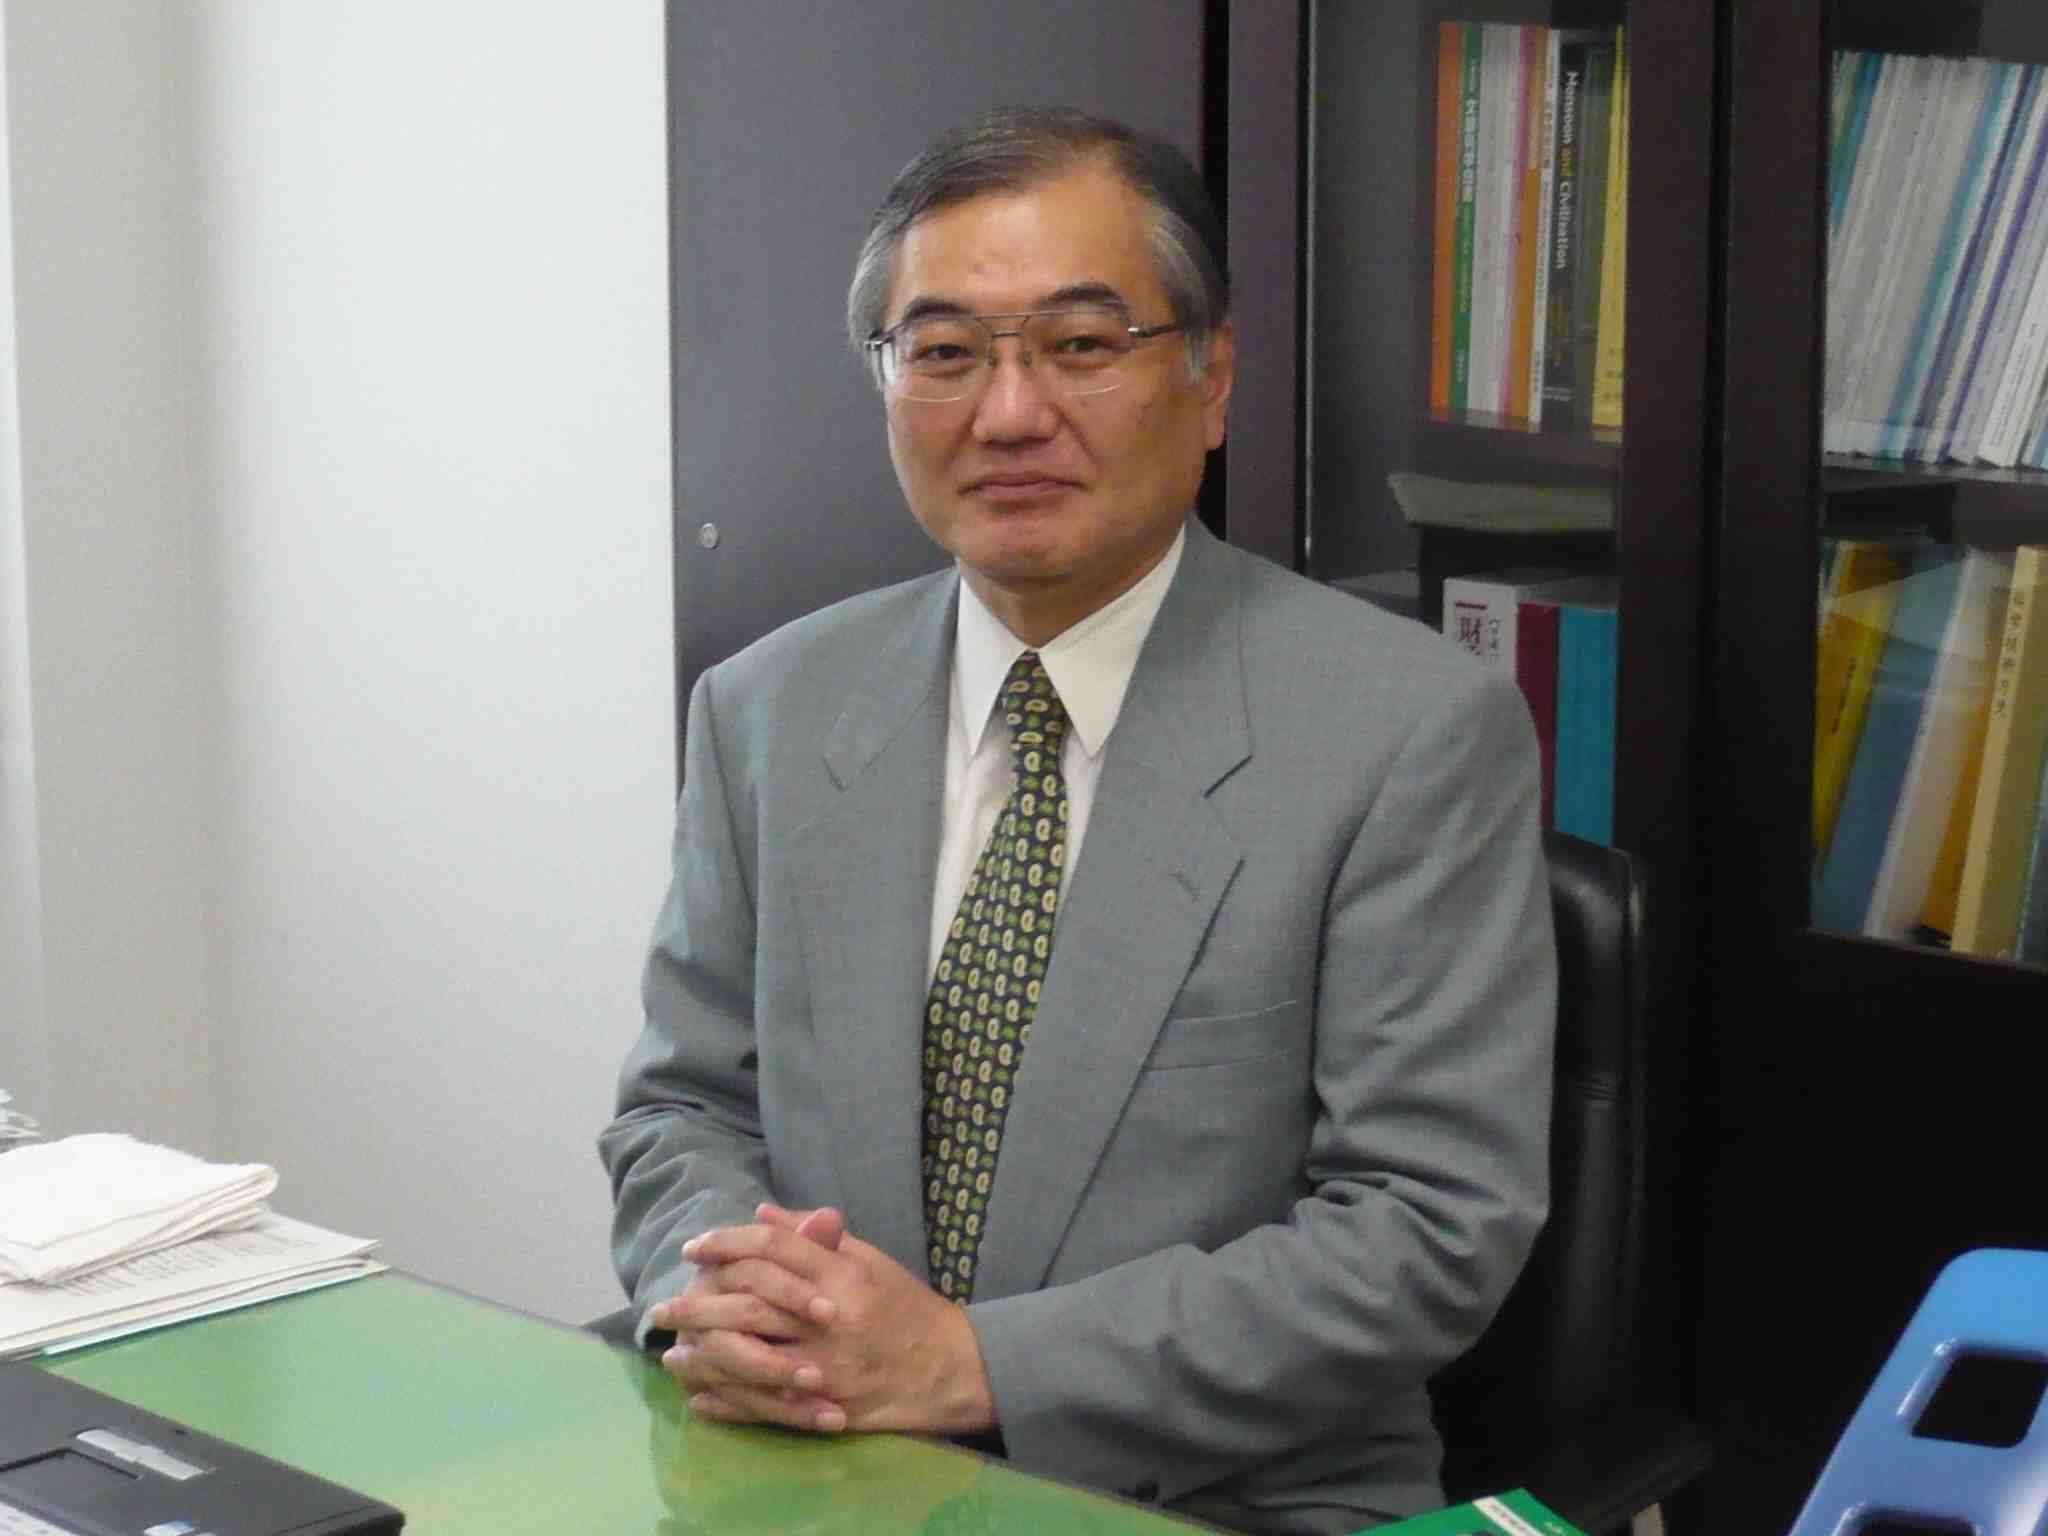 Deputy Director-General of Japan’s MEXT, Mr. Aoyama